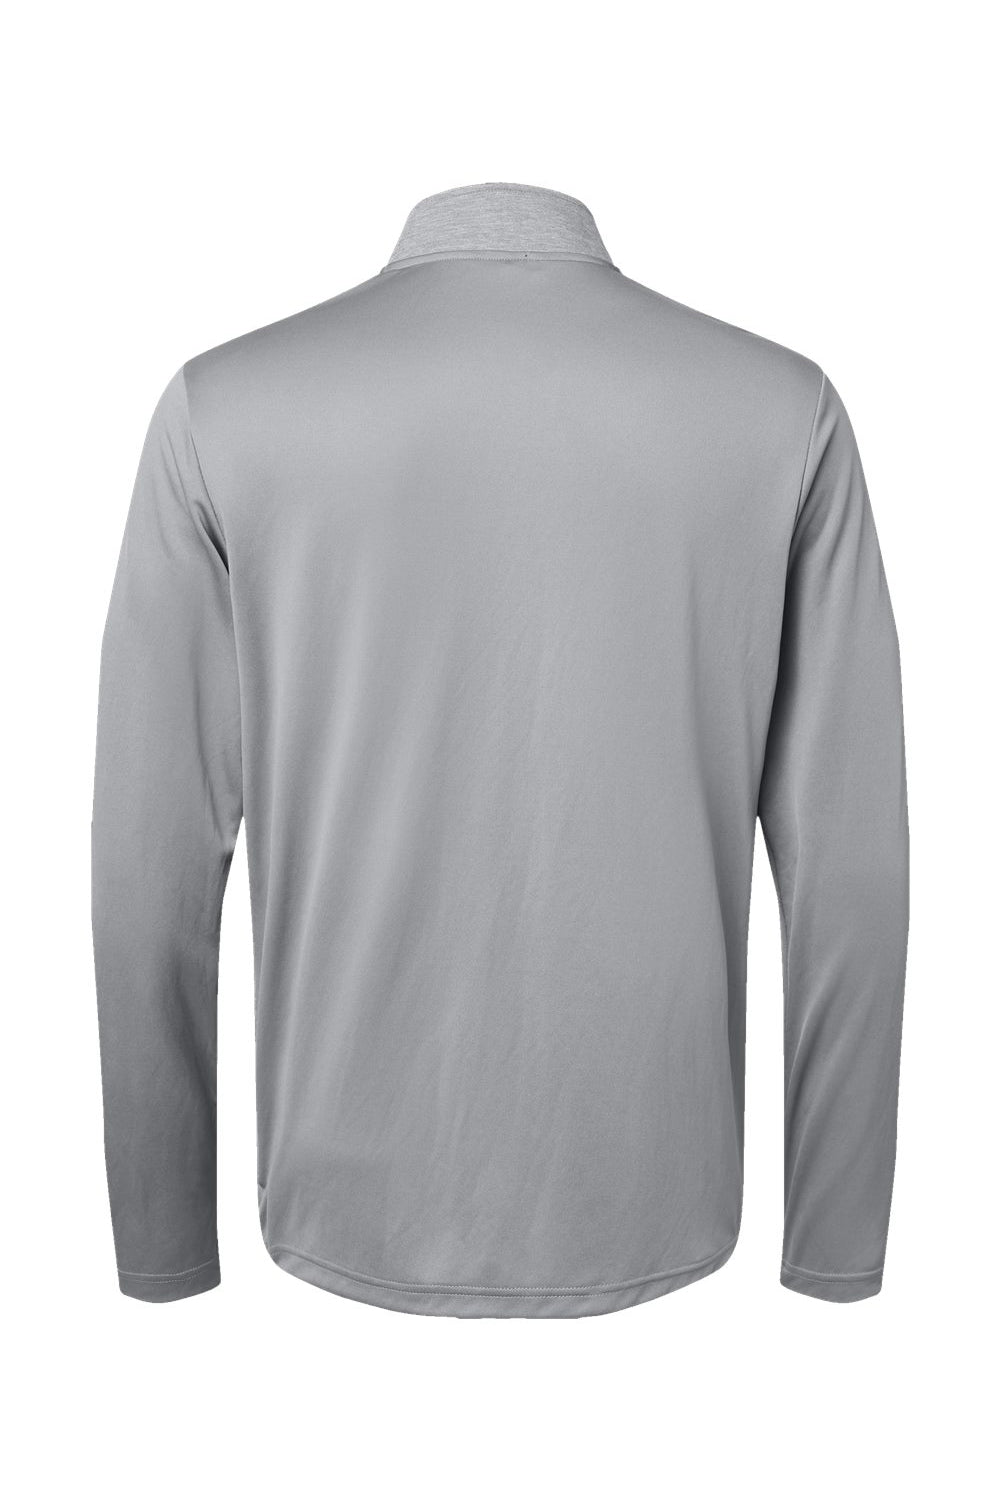 Adidas A522 Mens Heather Block Print 1/4 Zip Pullover Grey Melange/Grey/Black Flat Back